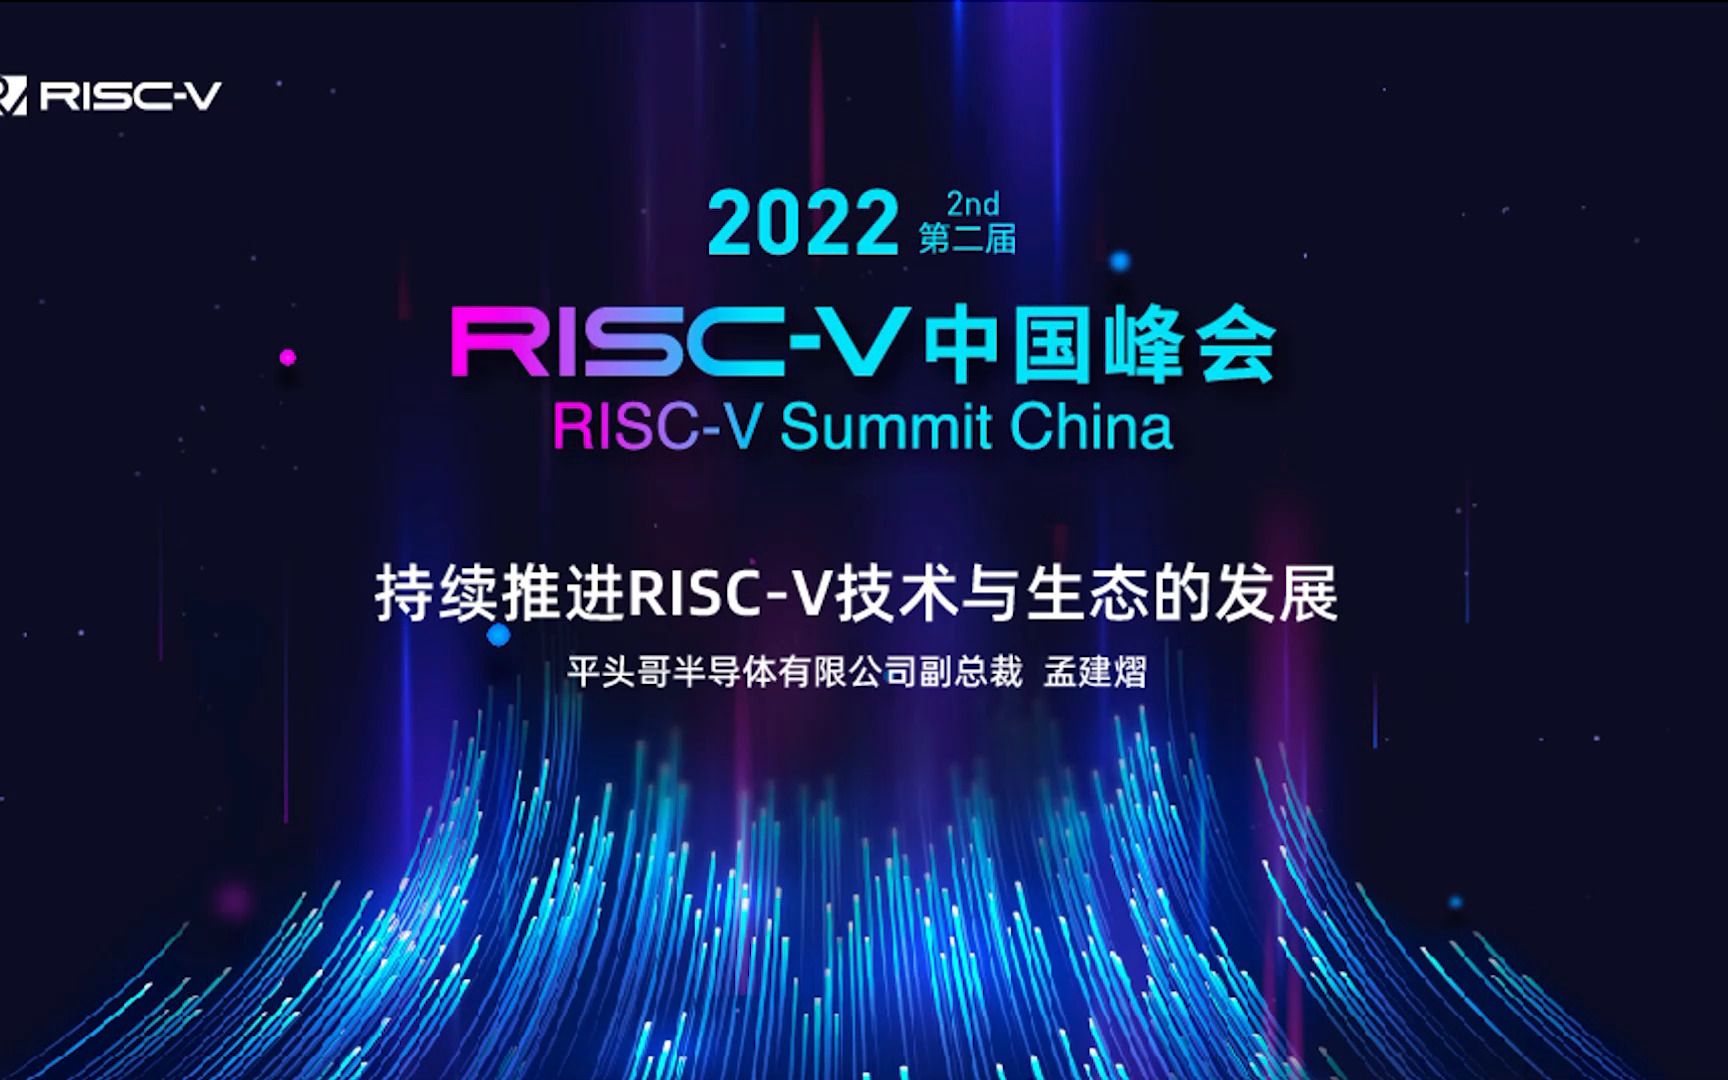 Keynote_ 持续推进RISC-V技术与生态发展 - 孟建熠，平头哥半导体副总裁 - RISC-2